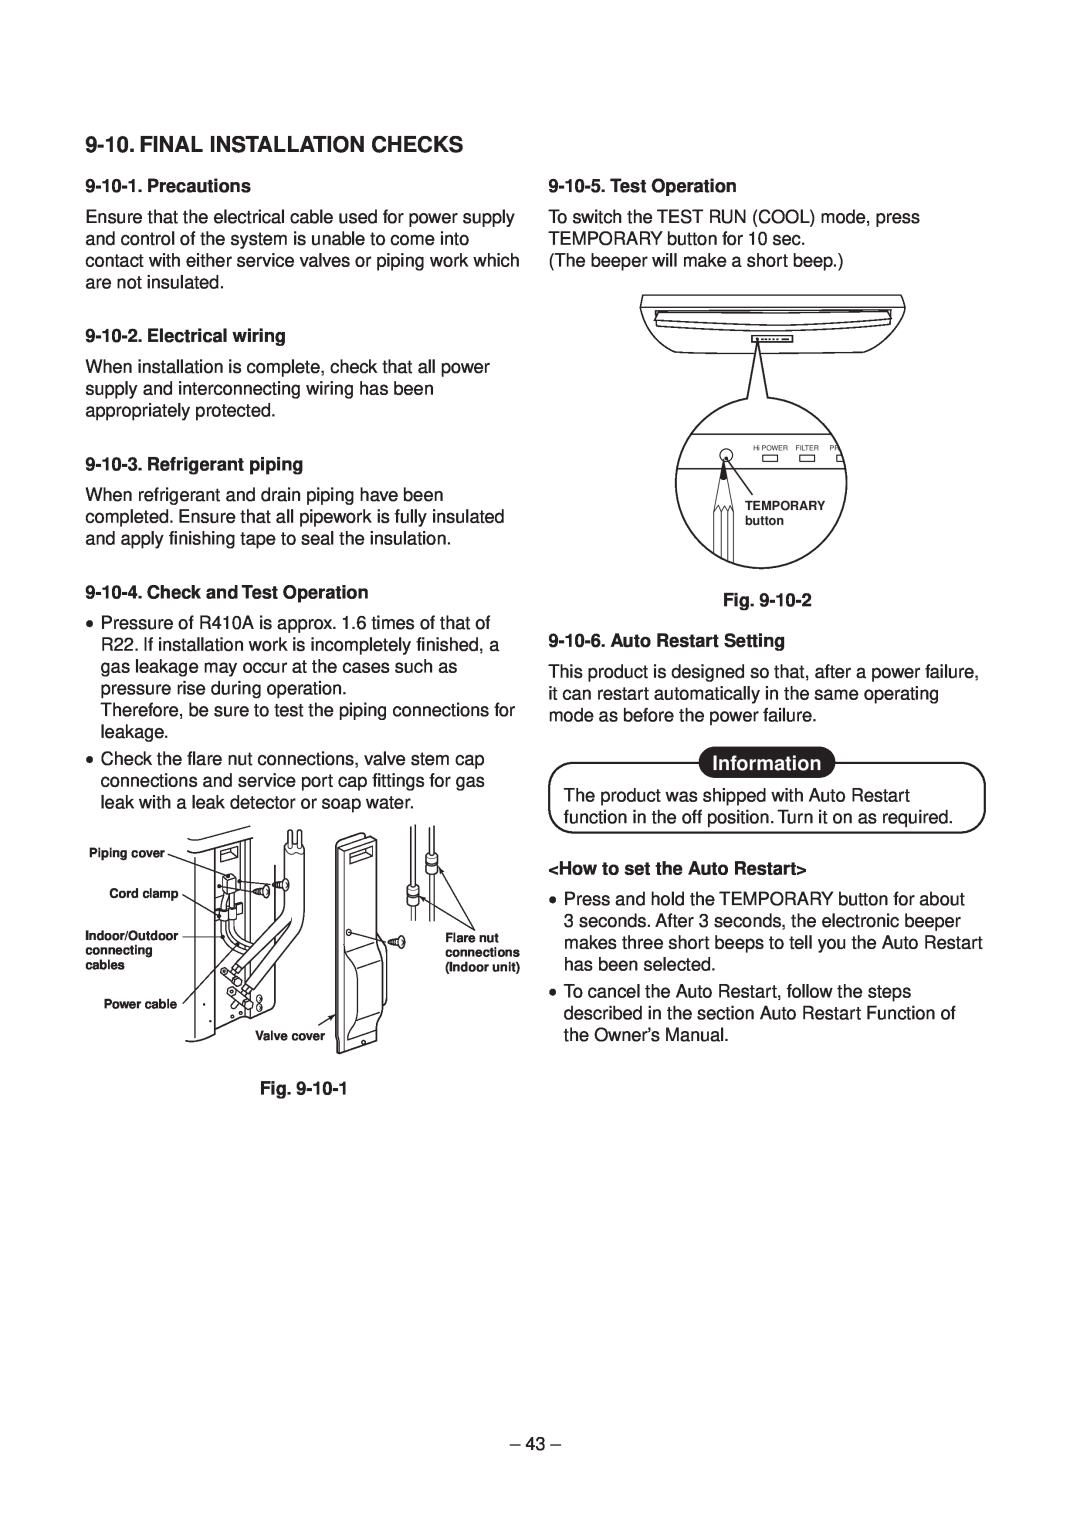 Toshiba RAV-SM560XT-E service manual Final Installation Checks, Information, Precautions, Test Operation, Electrical wiring 